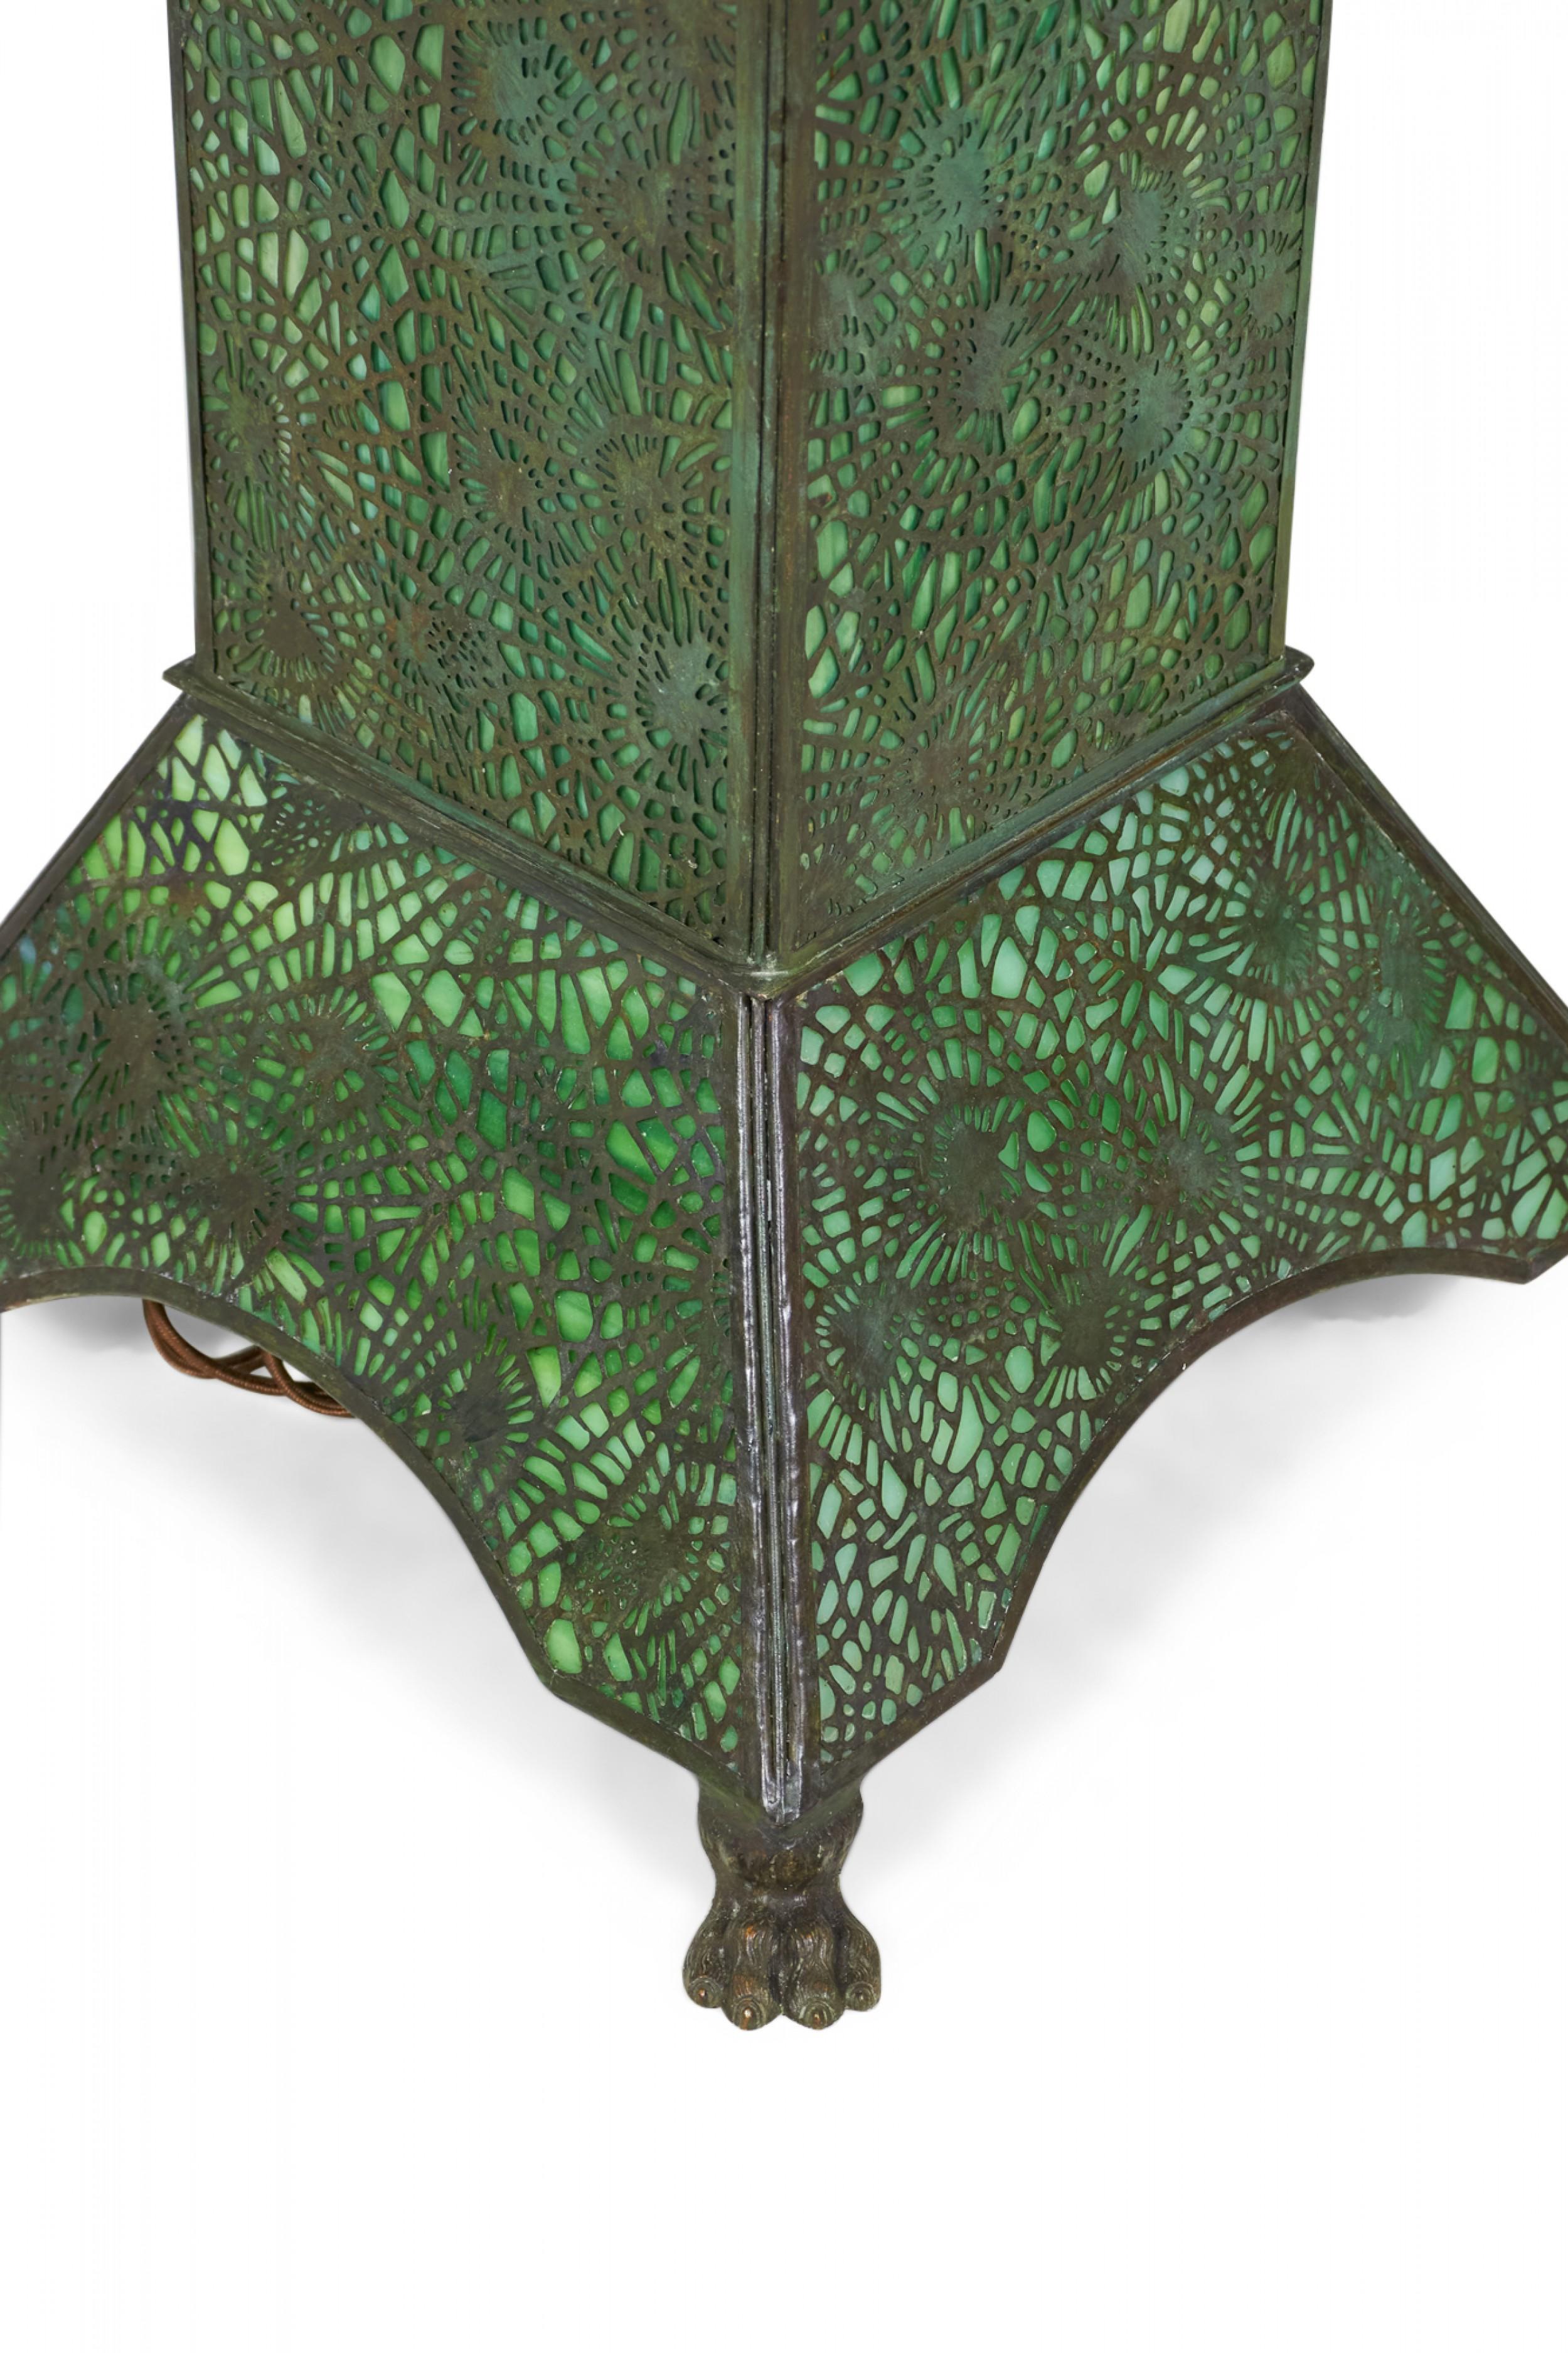 20th Century Art Nouveau Green Slag Glass and Metal Filigree Illuminated Pedestal For Sale